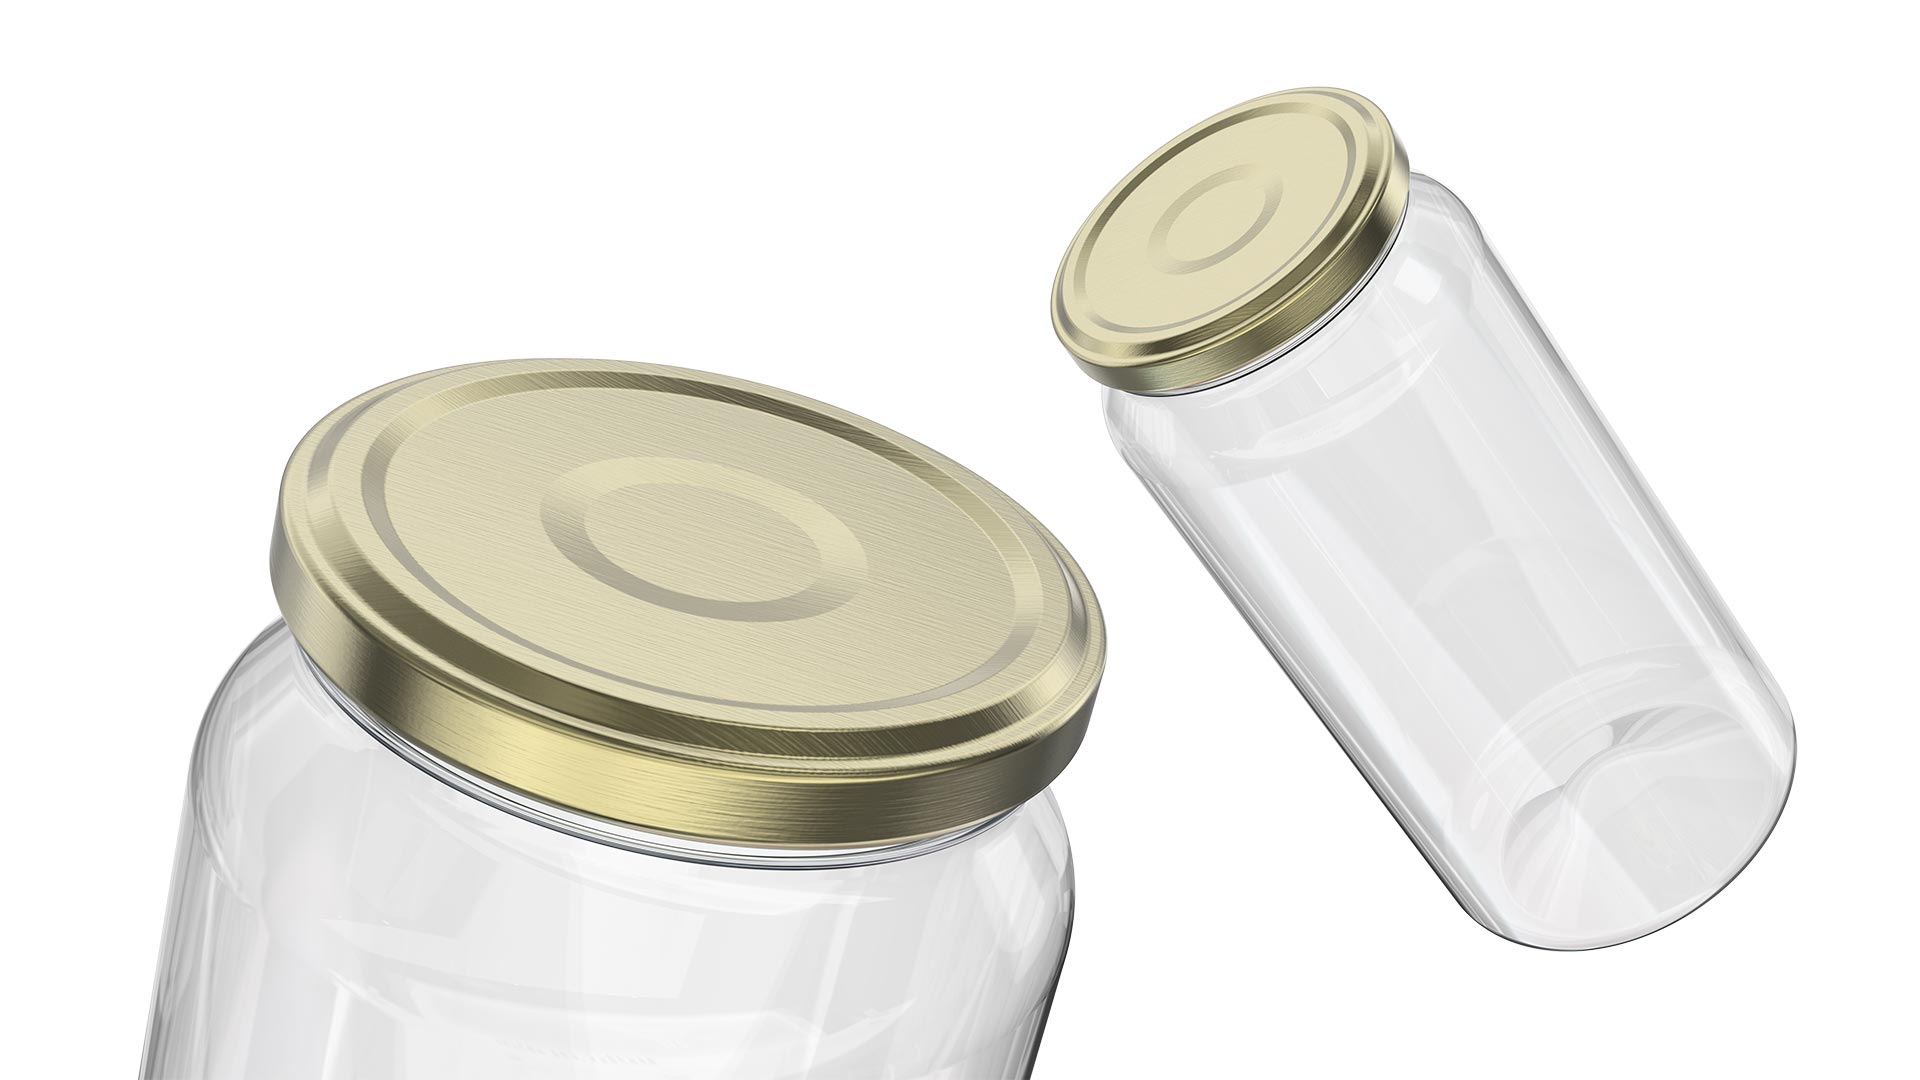 A brass-colored closure on a glass jar